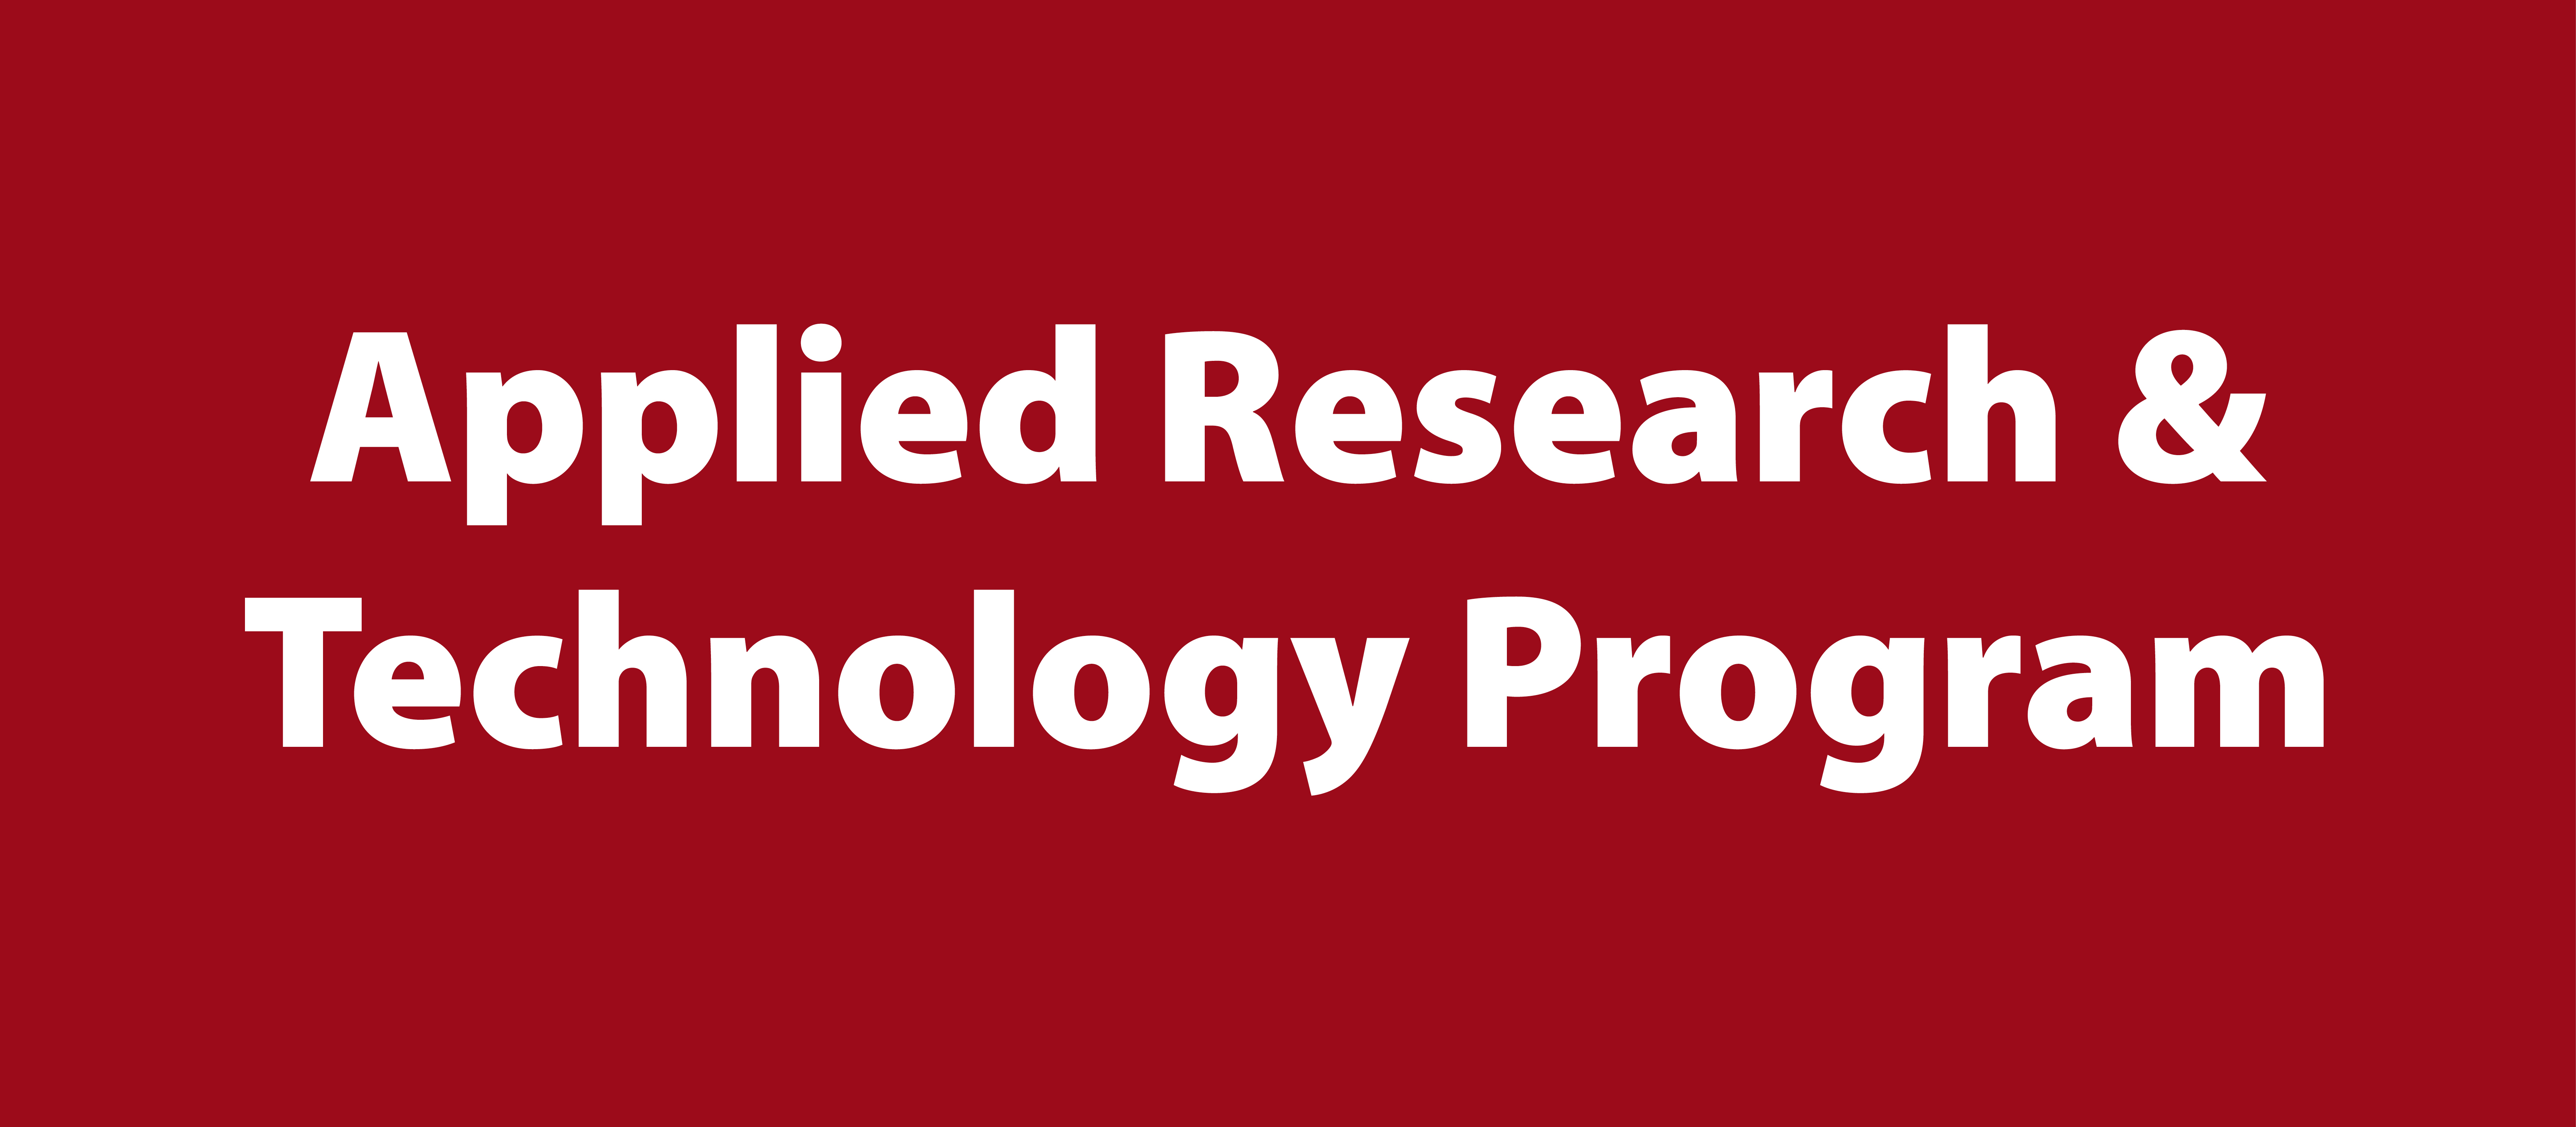 Applied Research & Technology Program